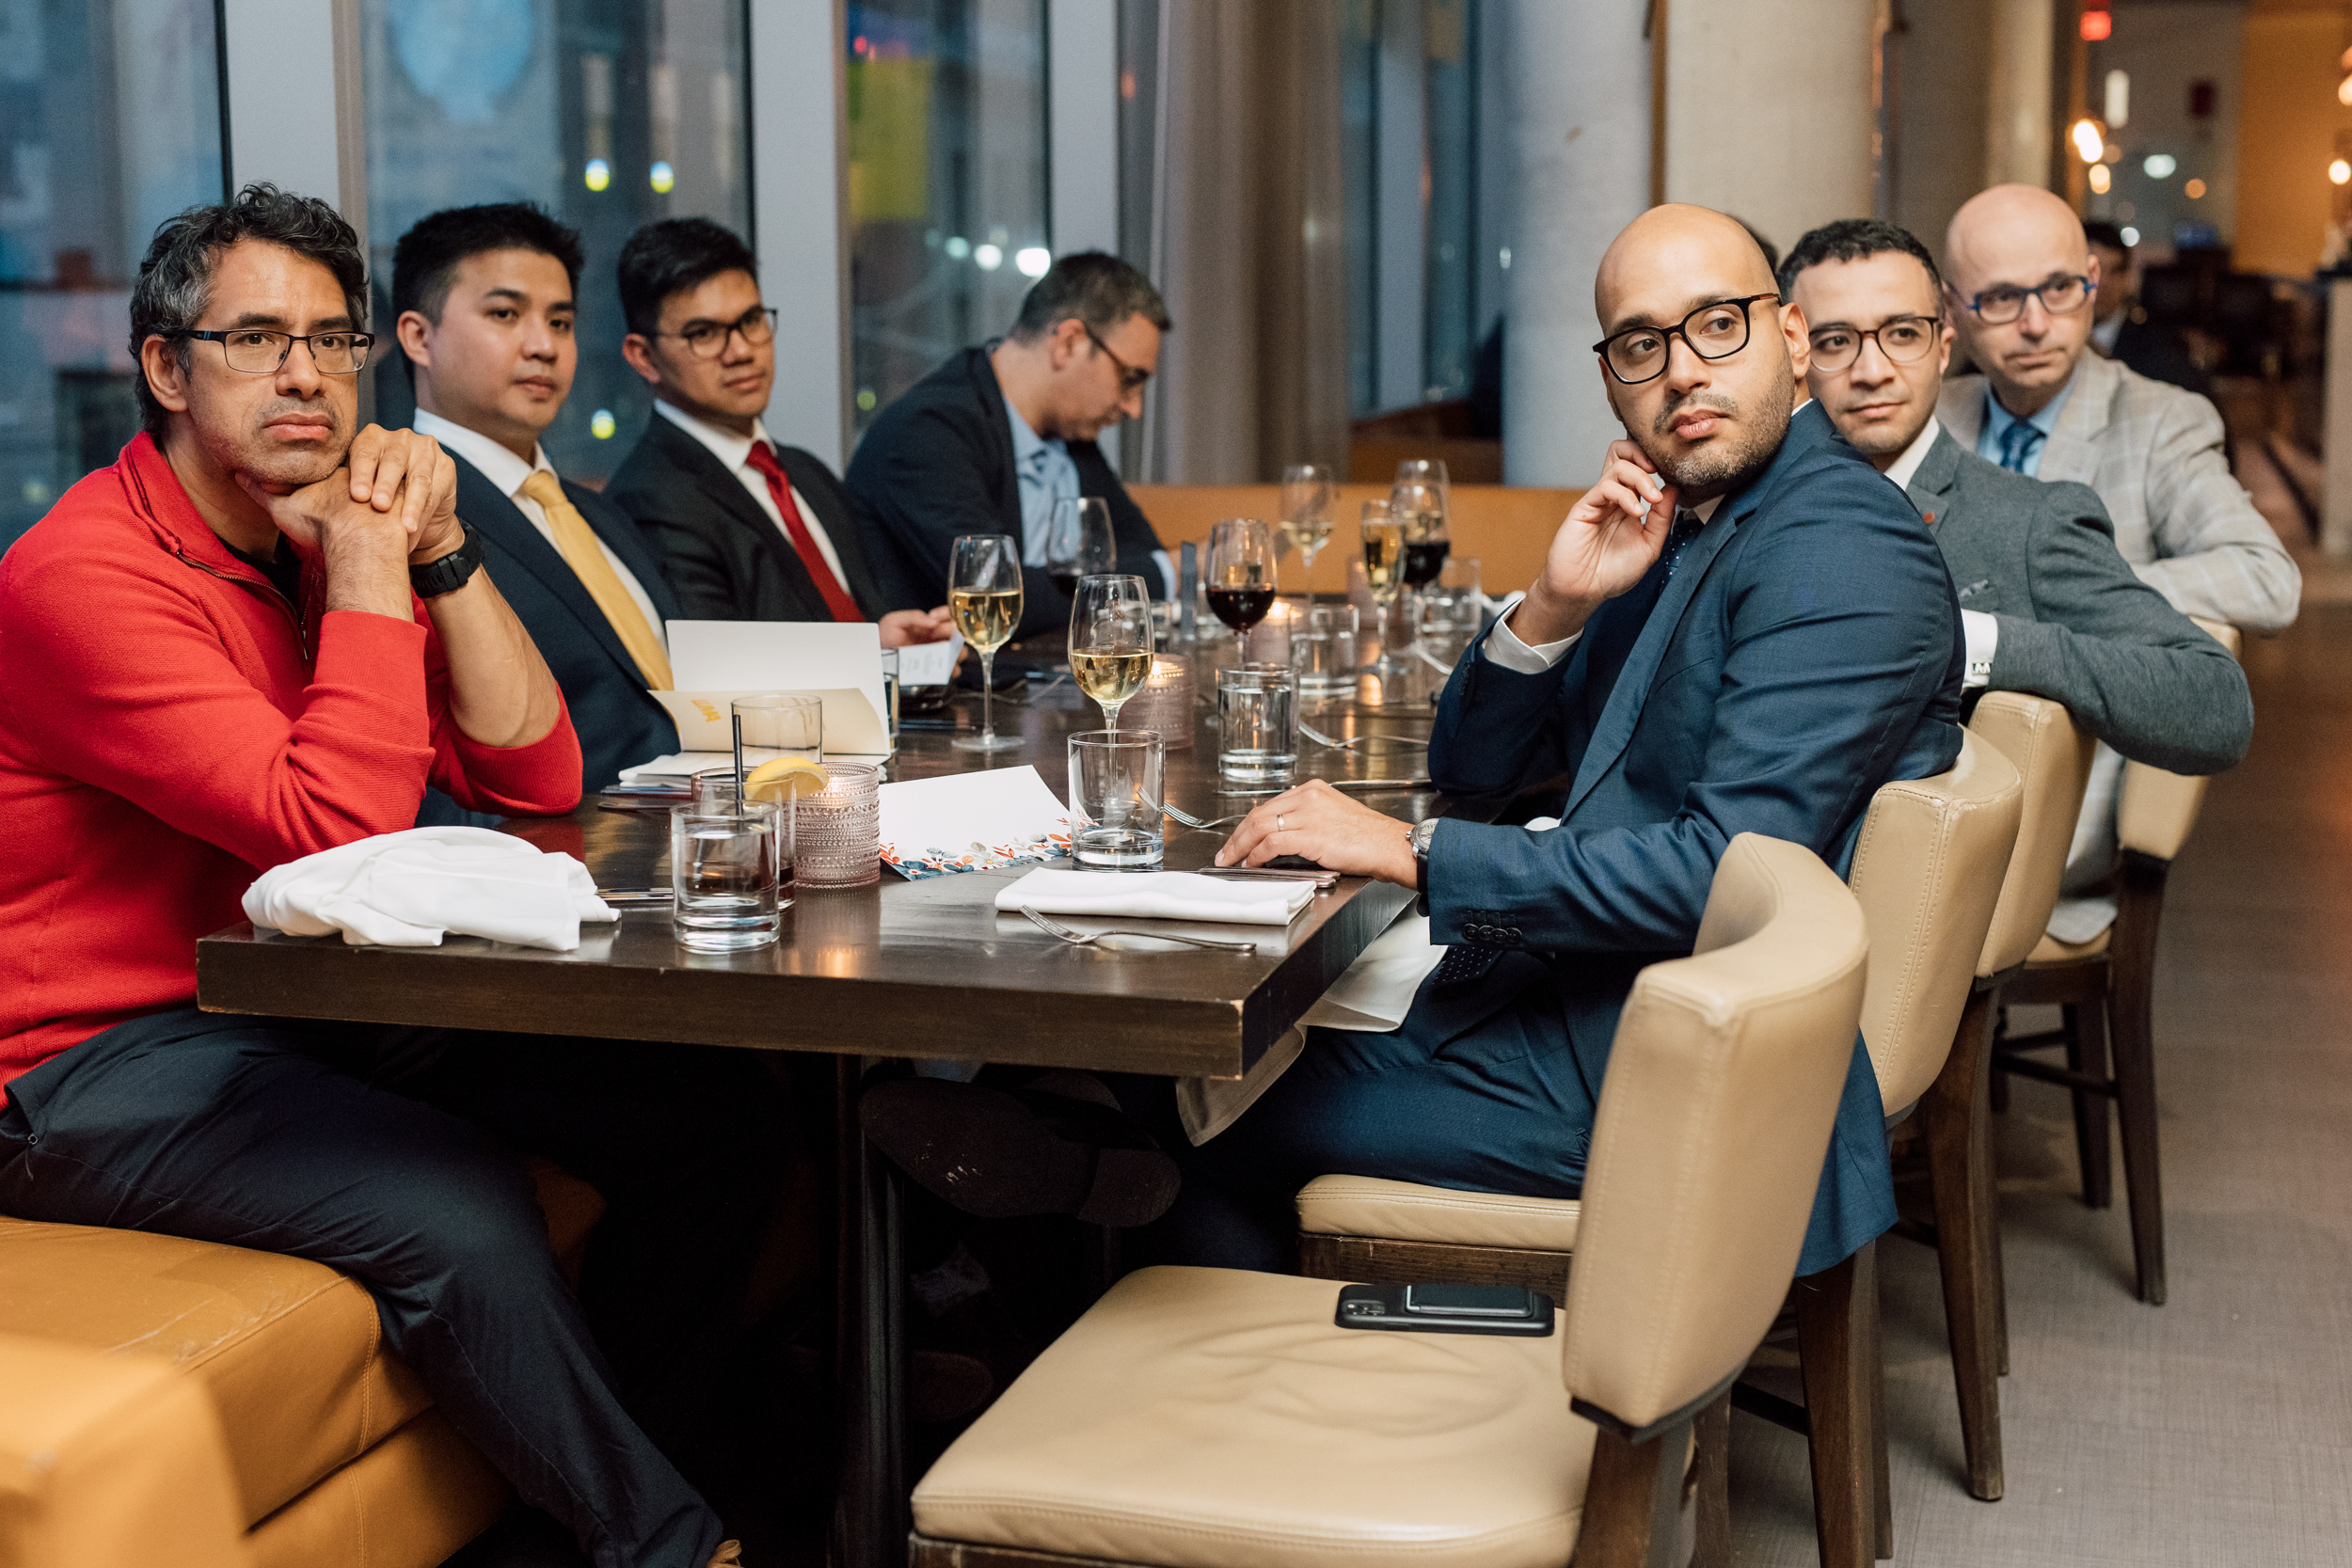 A group of men celebrating graduation at a restaurant.